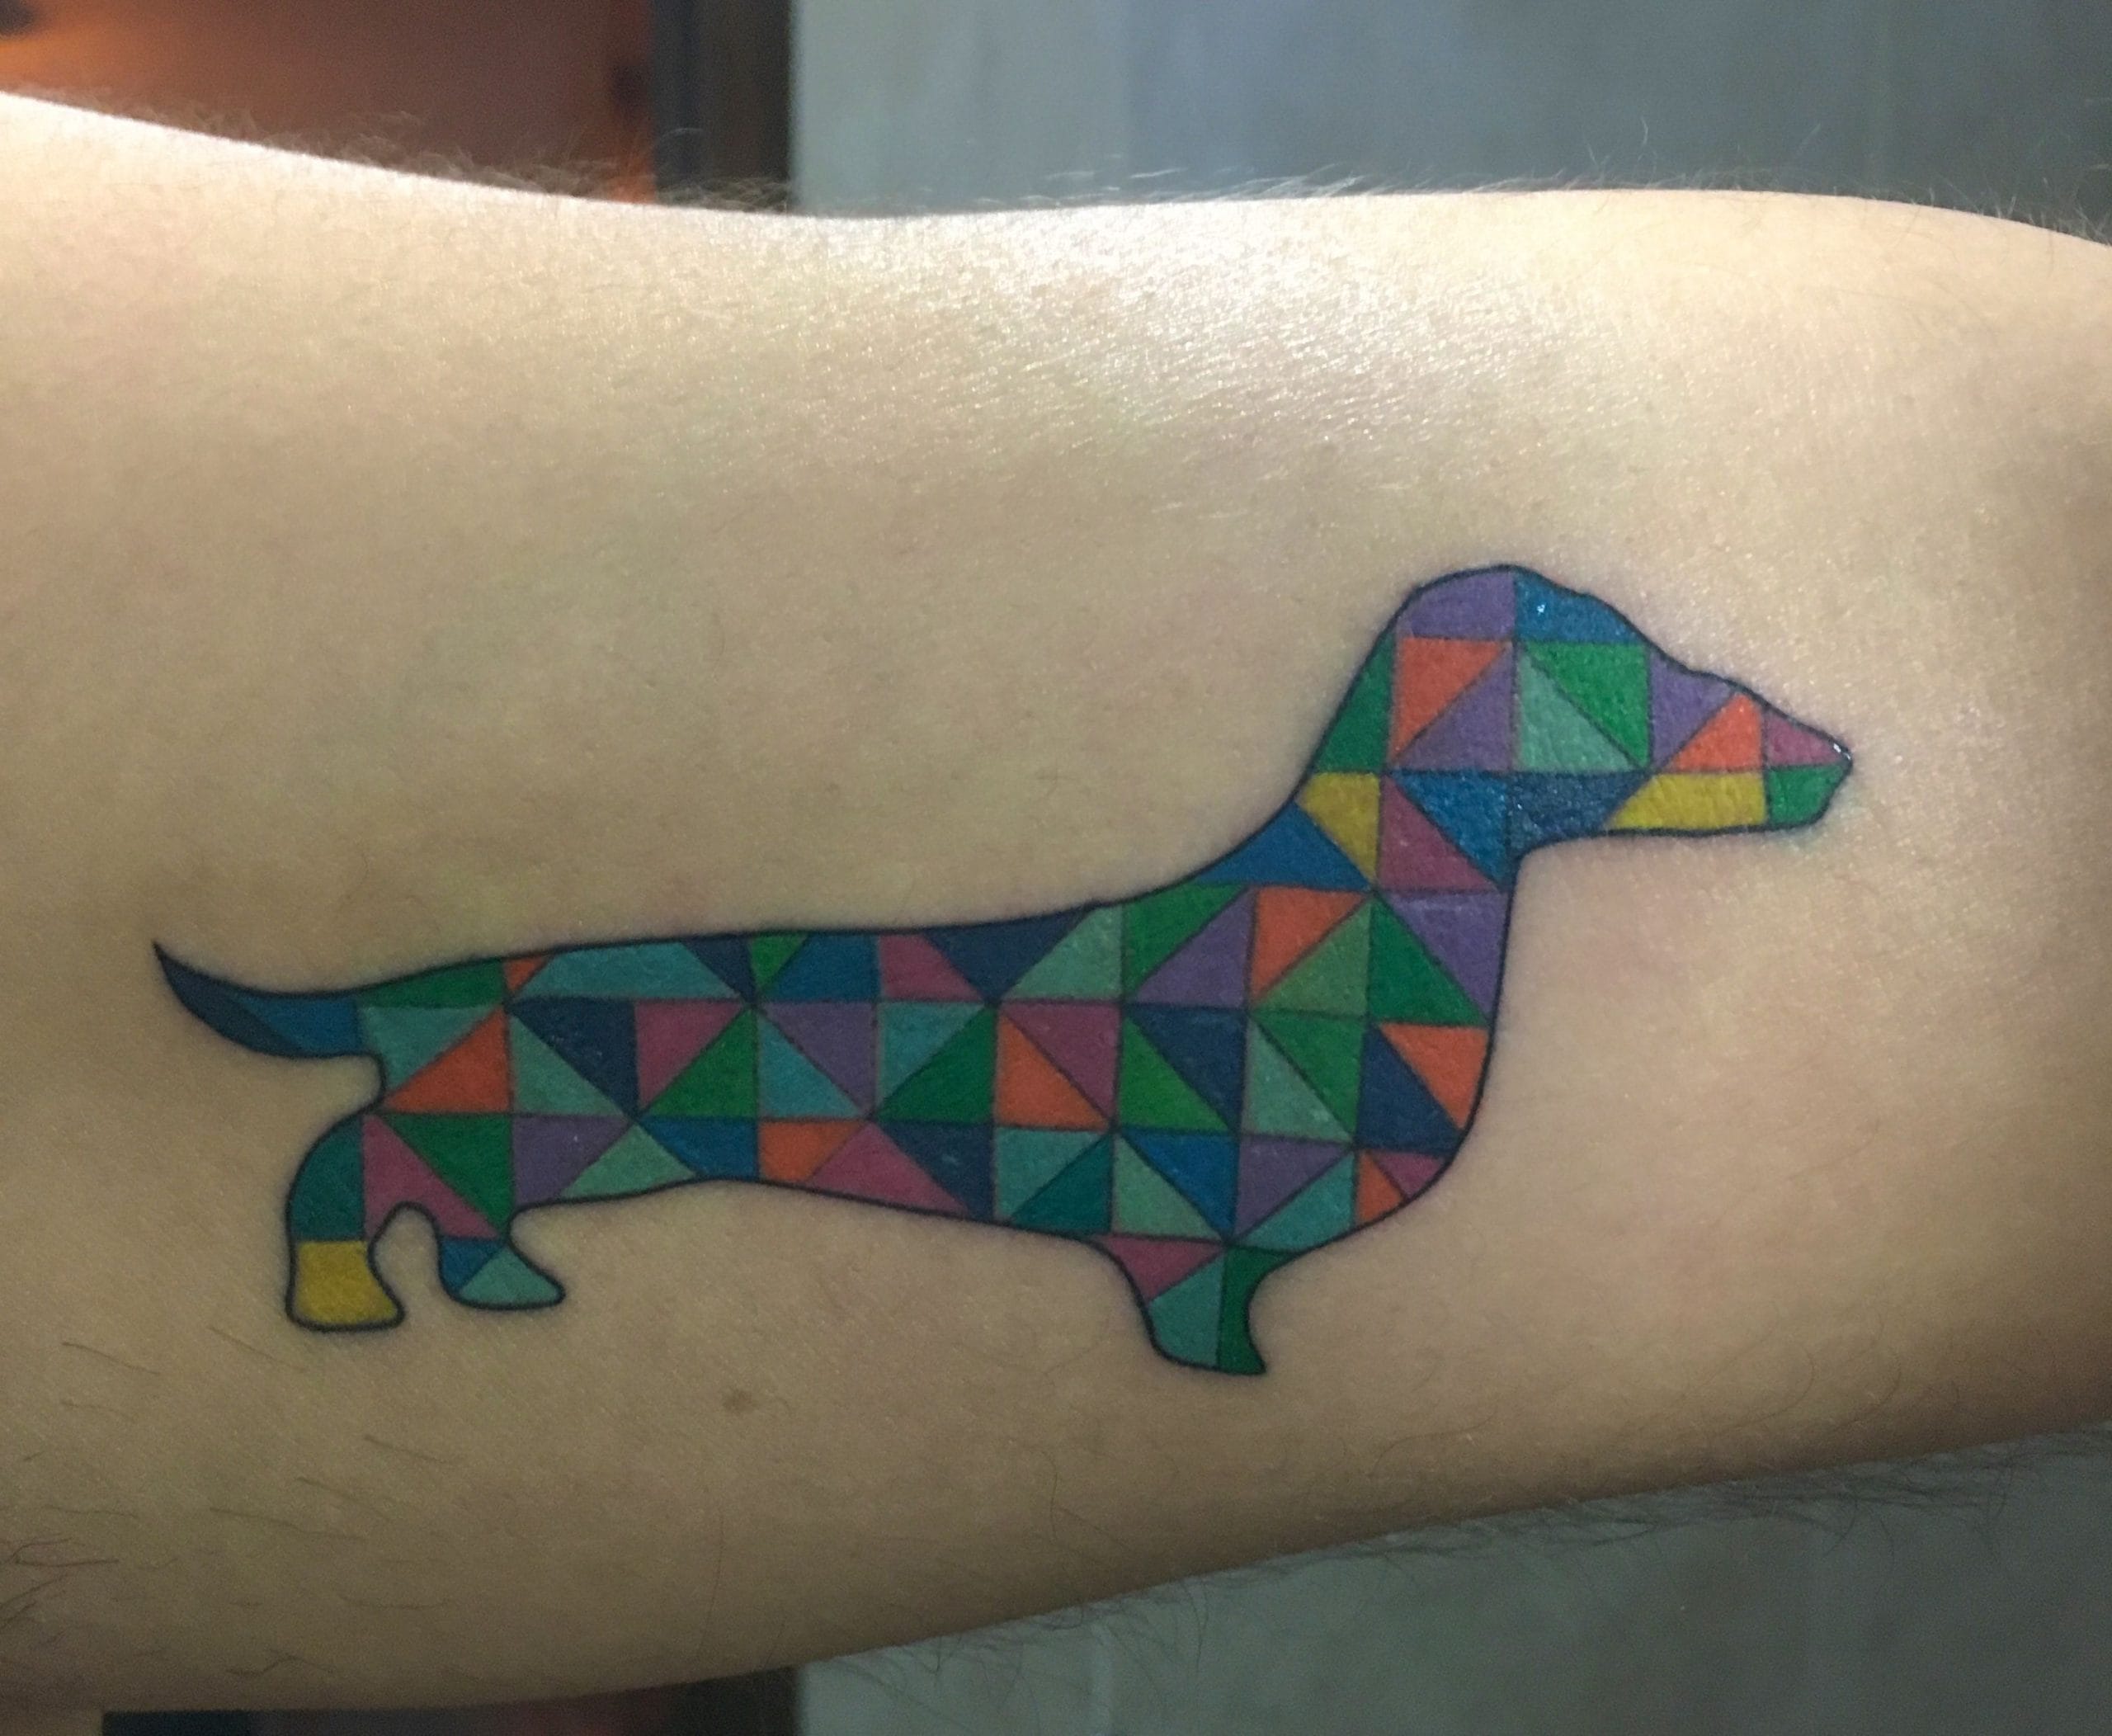 32 Of The Best Dachshund Dog Tattoo Ideas Ever - PetPress